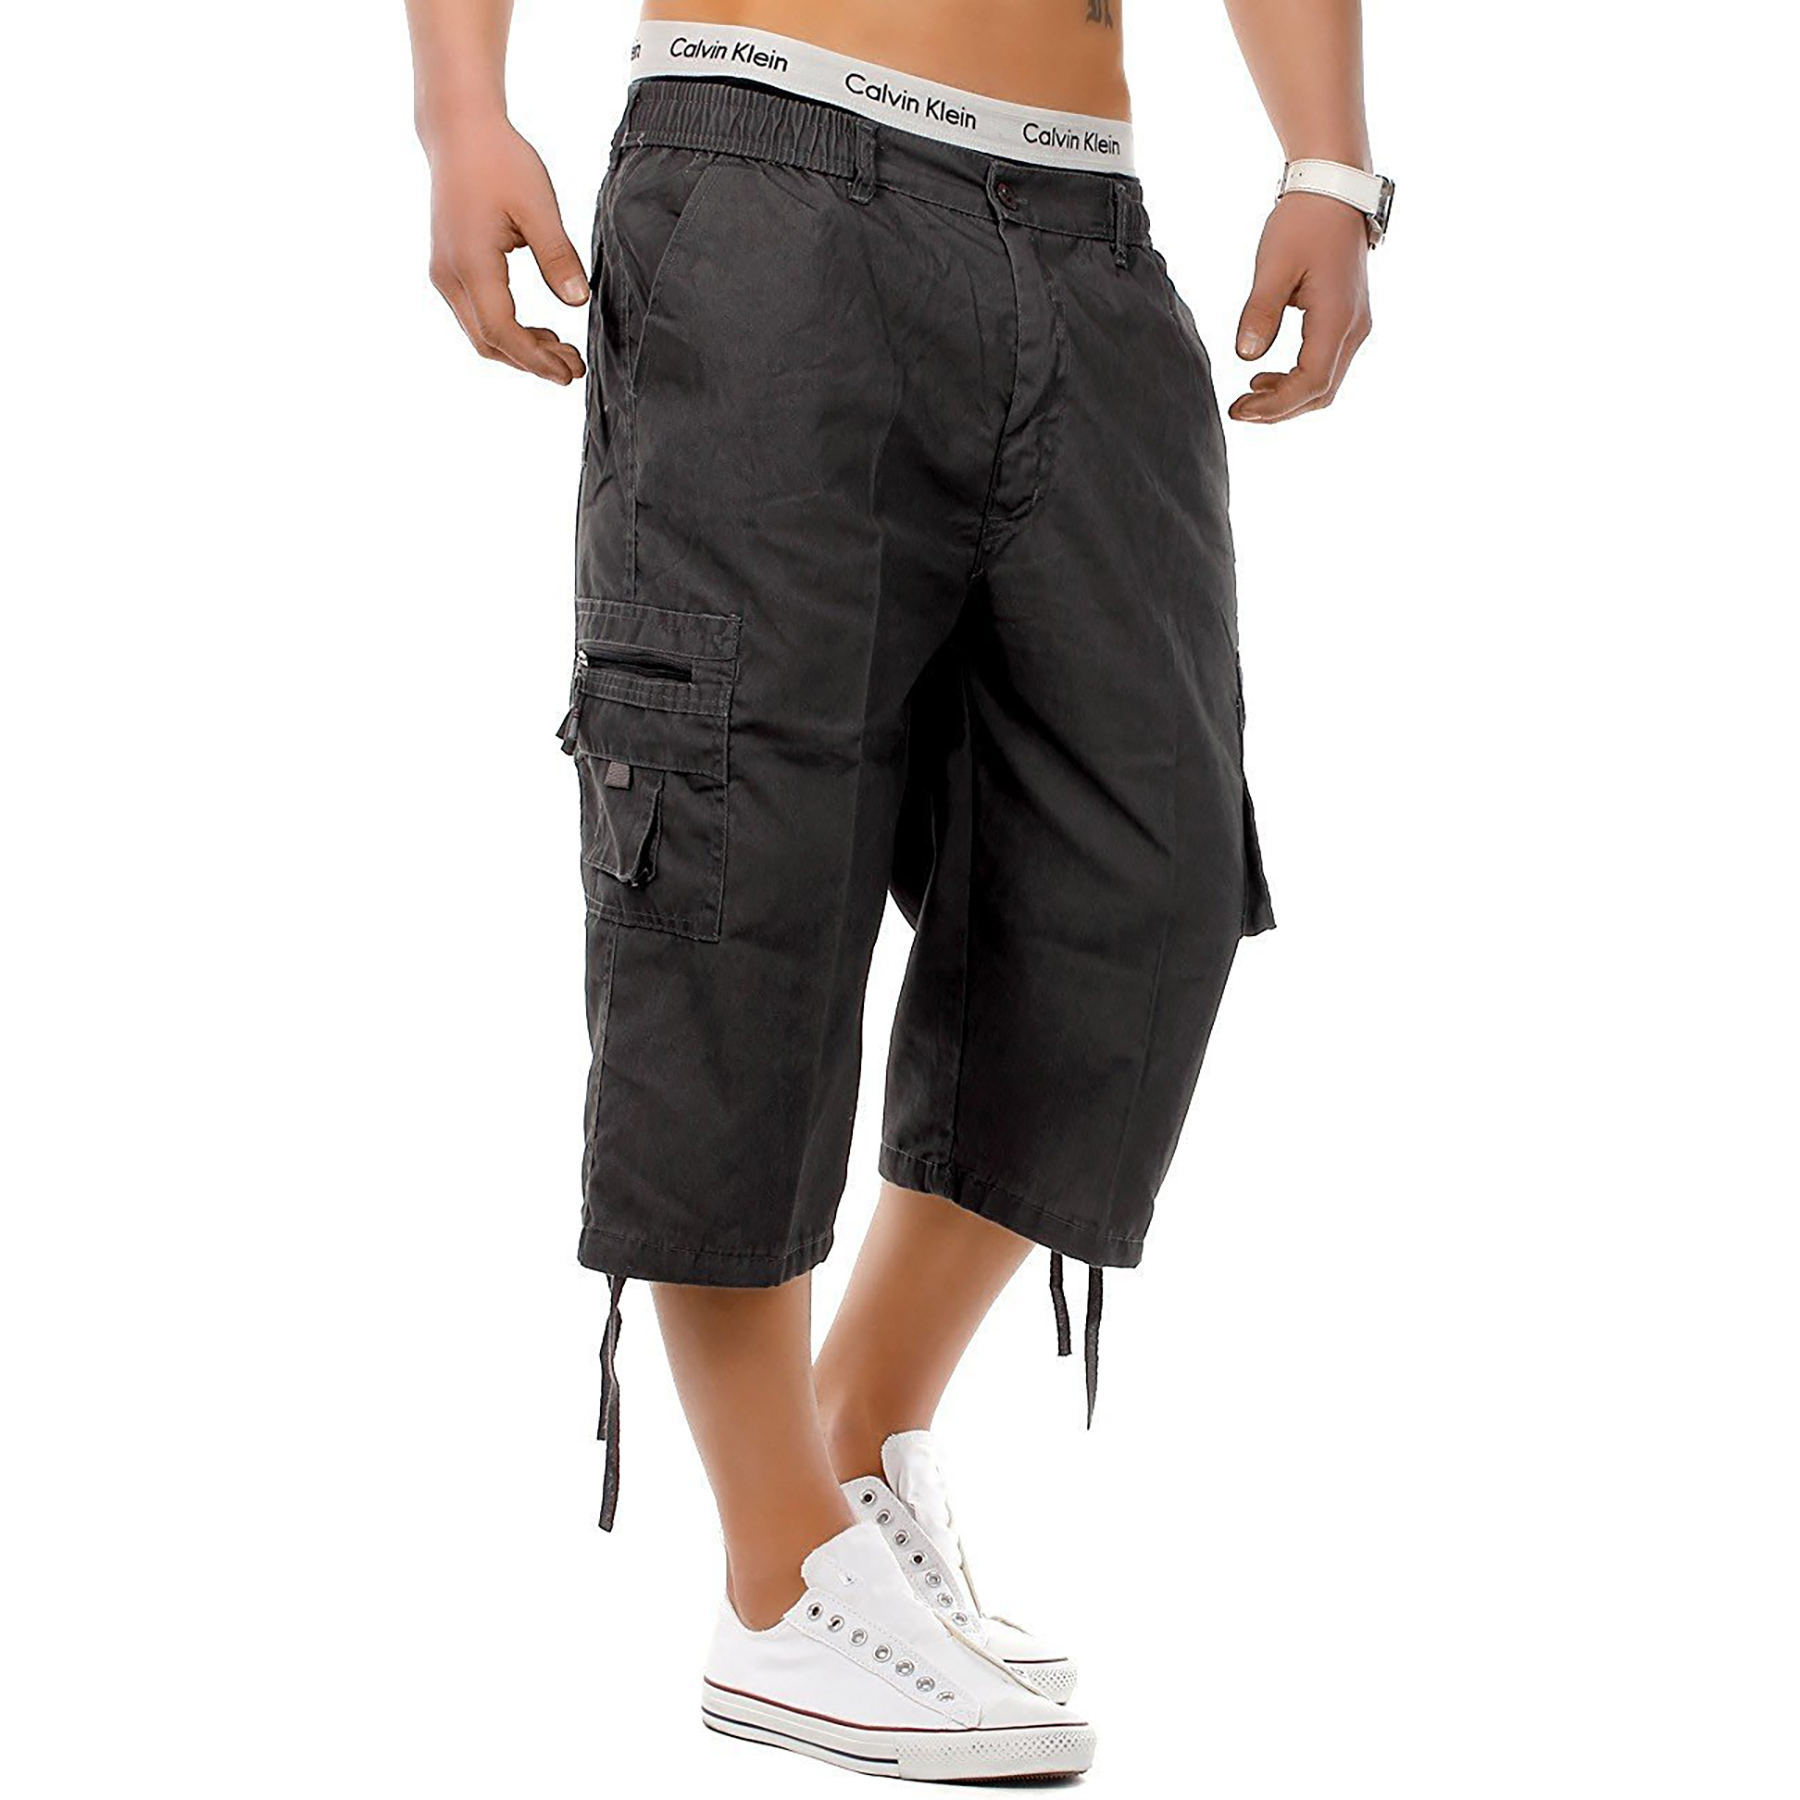 New Mens 3/4 Shorts Elasticated Waist Cargo Combat Long Knee Length Cotton Pants